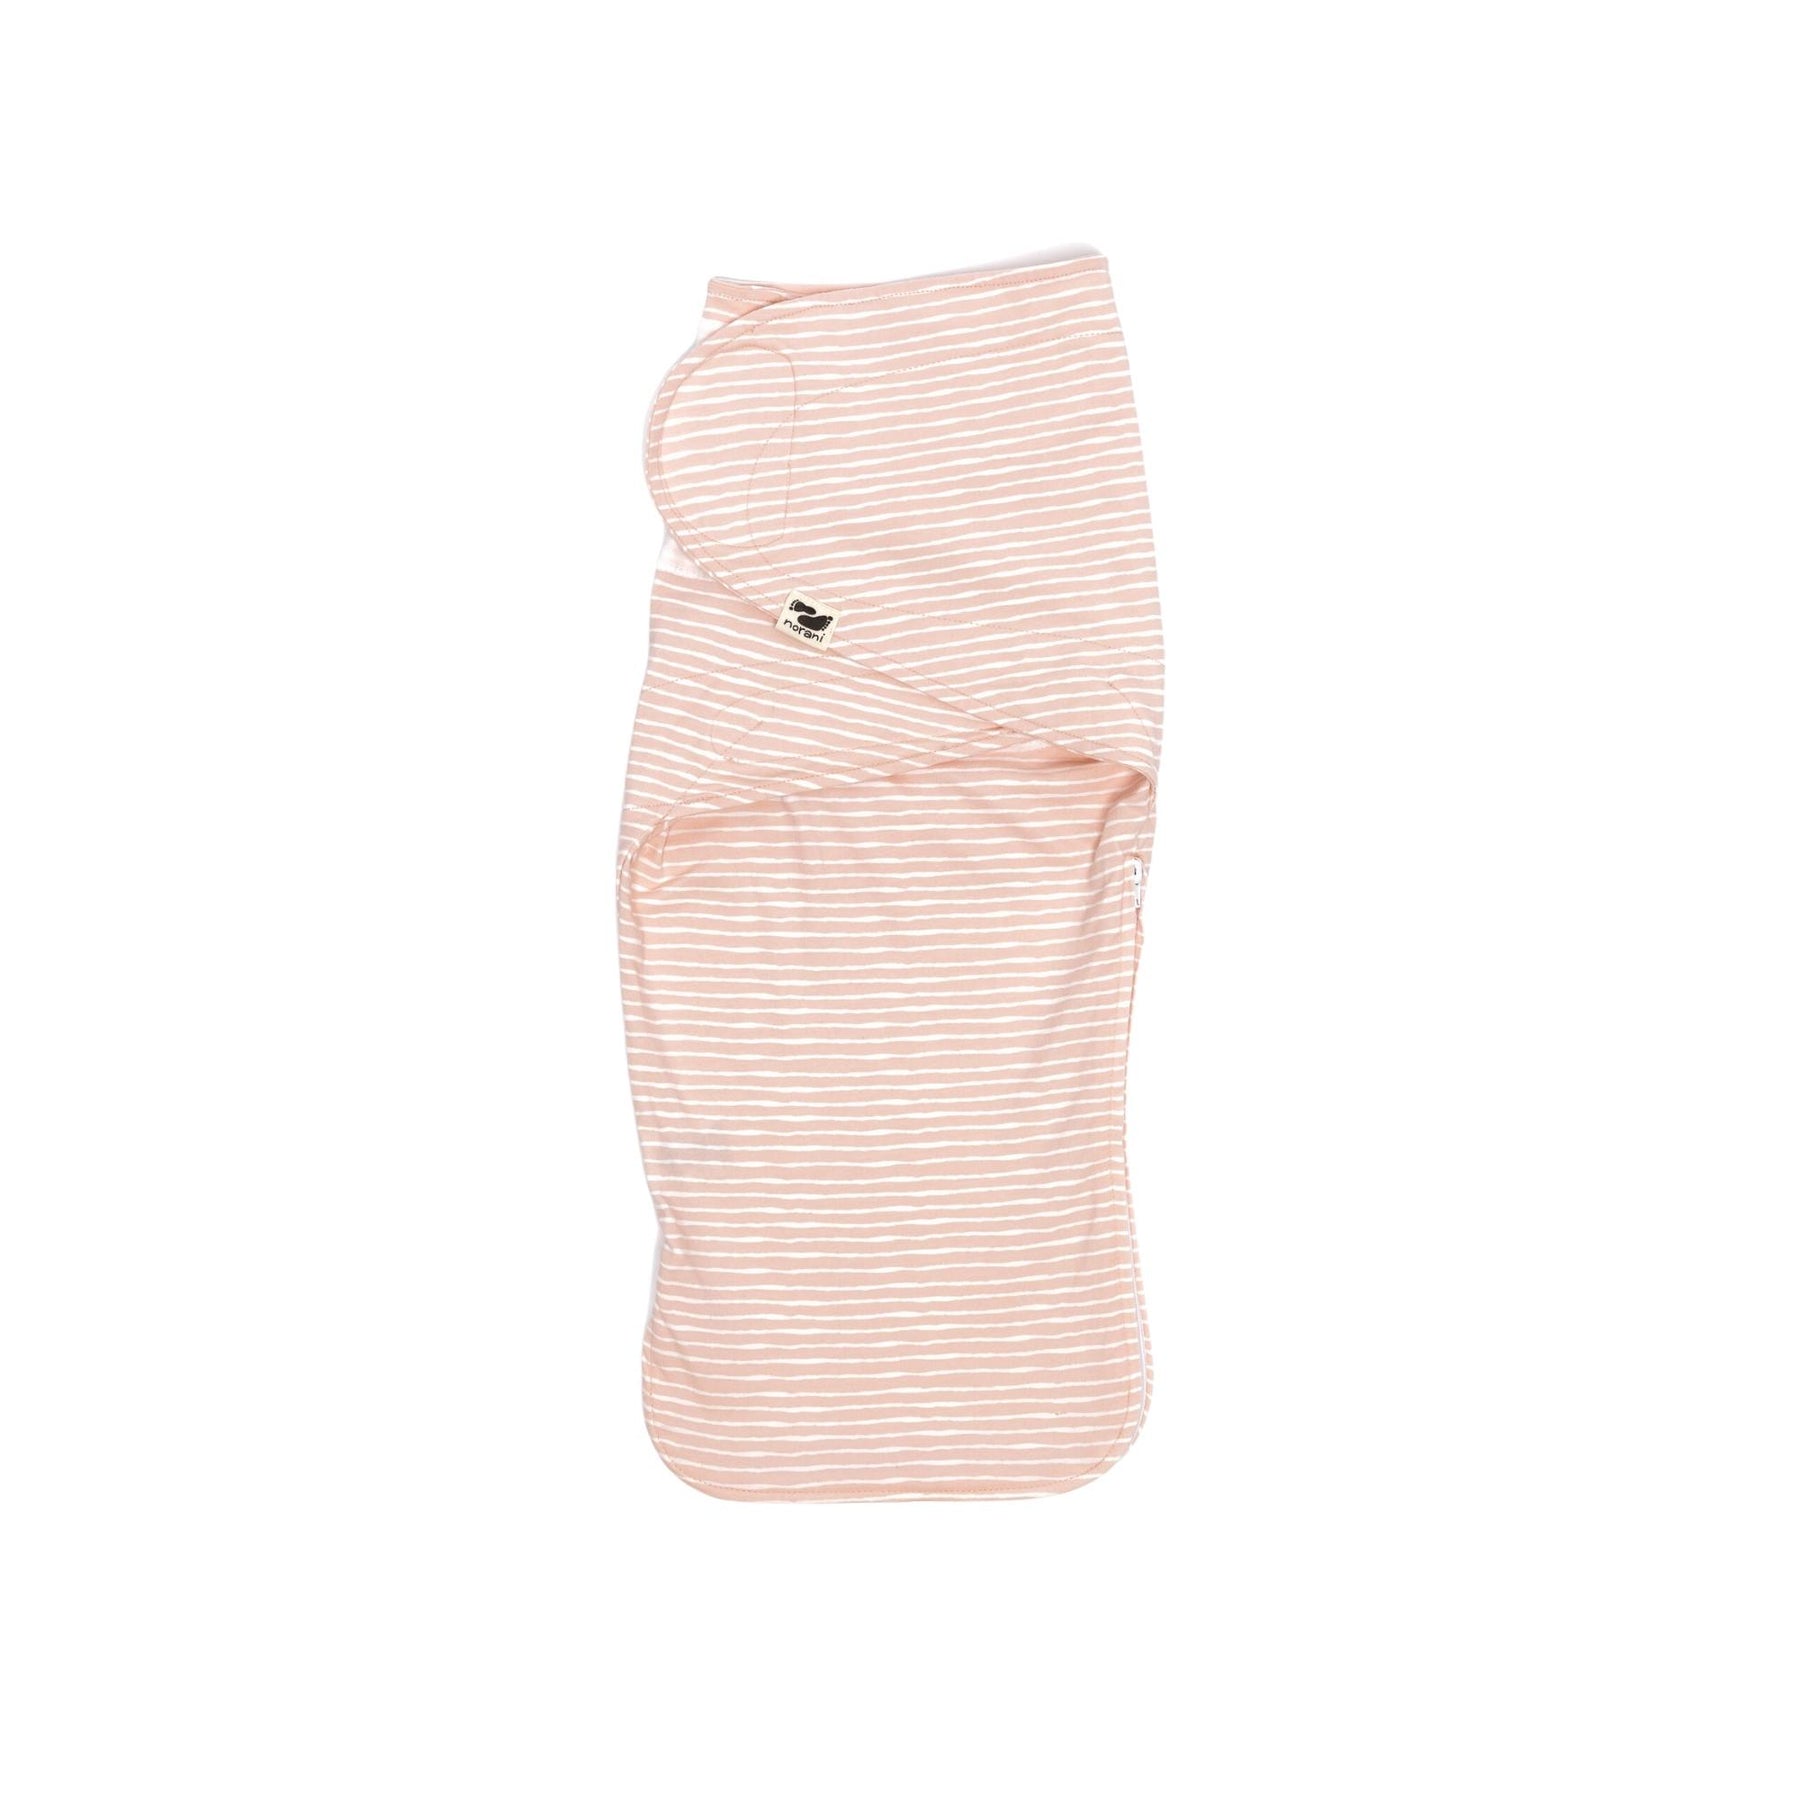 norani baby snugababe sleep pod in Pink and white stripes